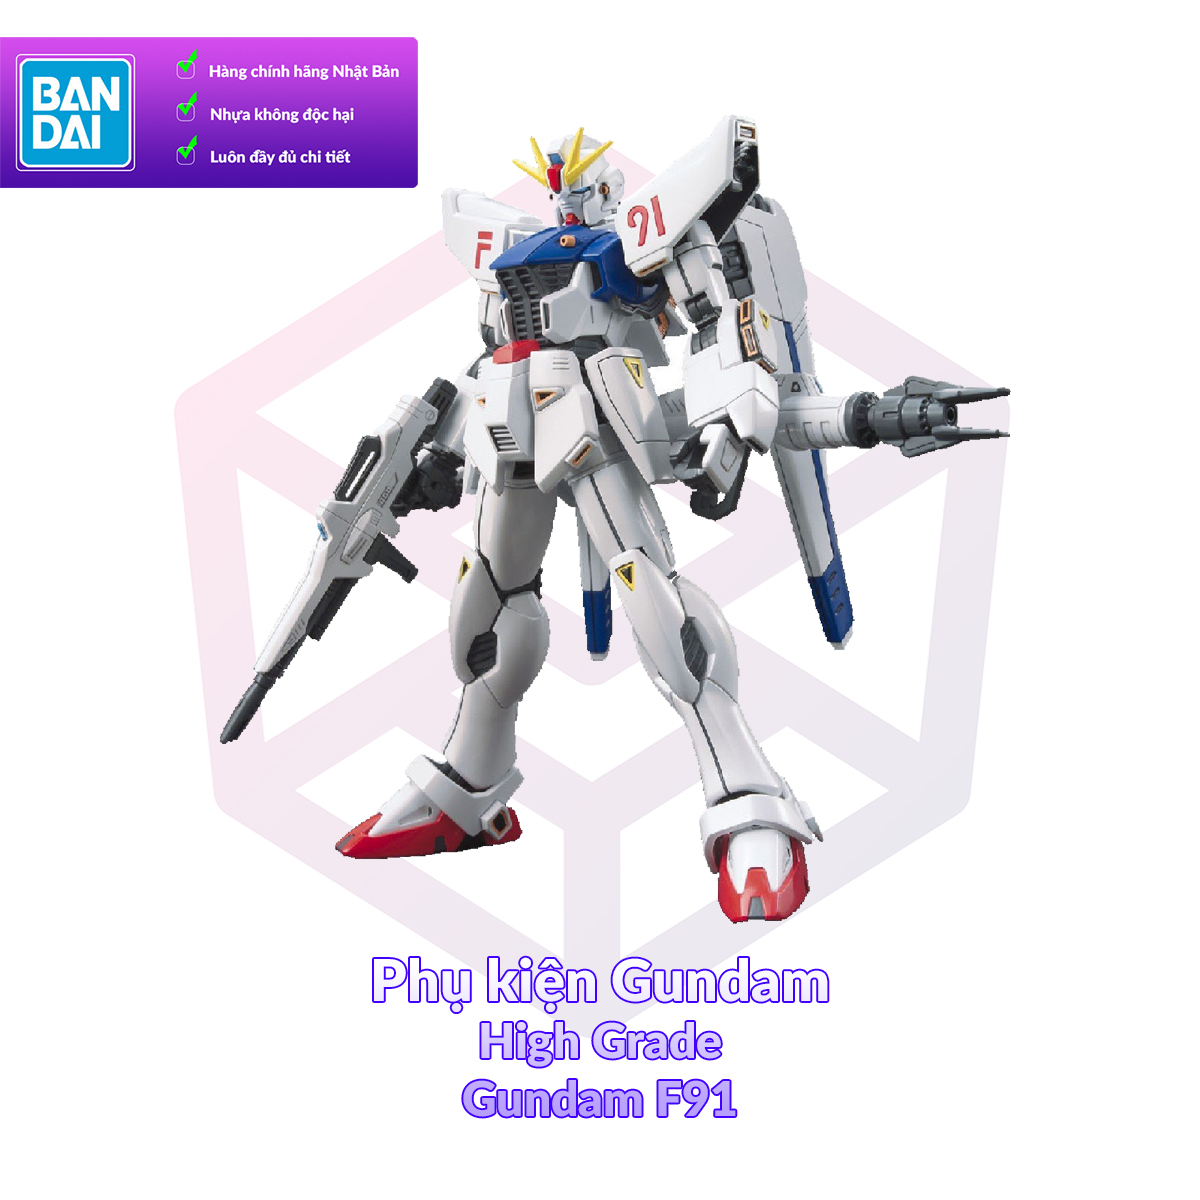 7-11 12 VOUCHER 8%Mô Hình Gundam Bandai HG 167 Gundam F91 1 144 MS Gundam